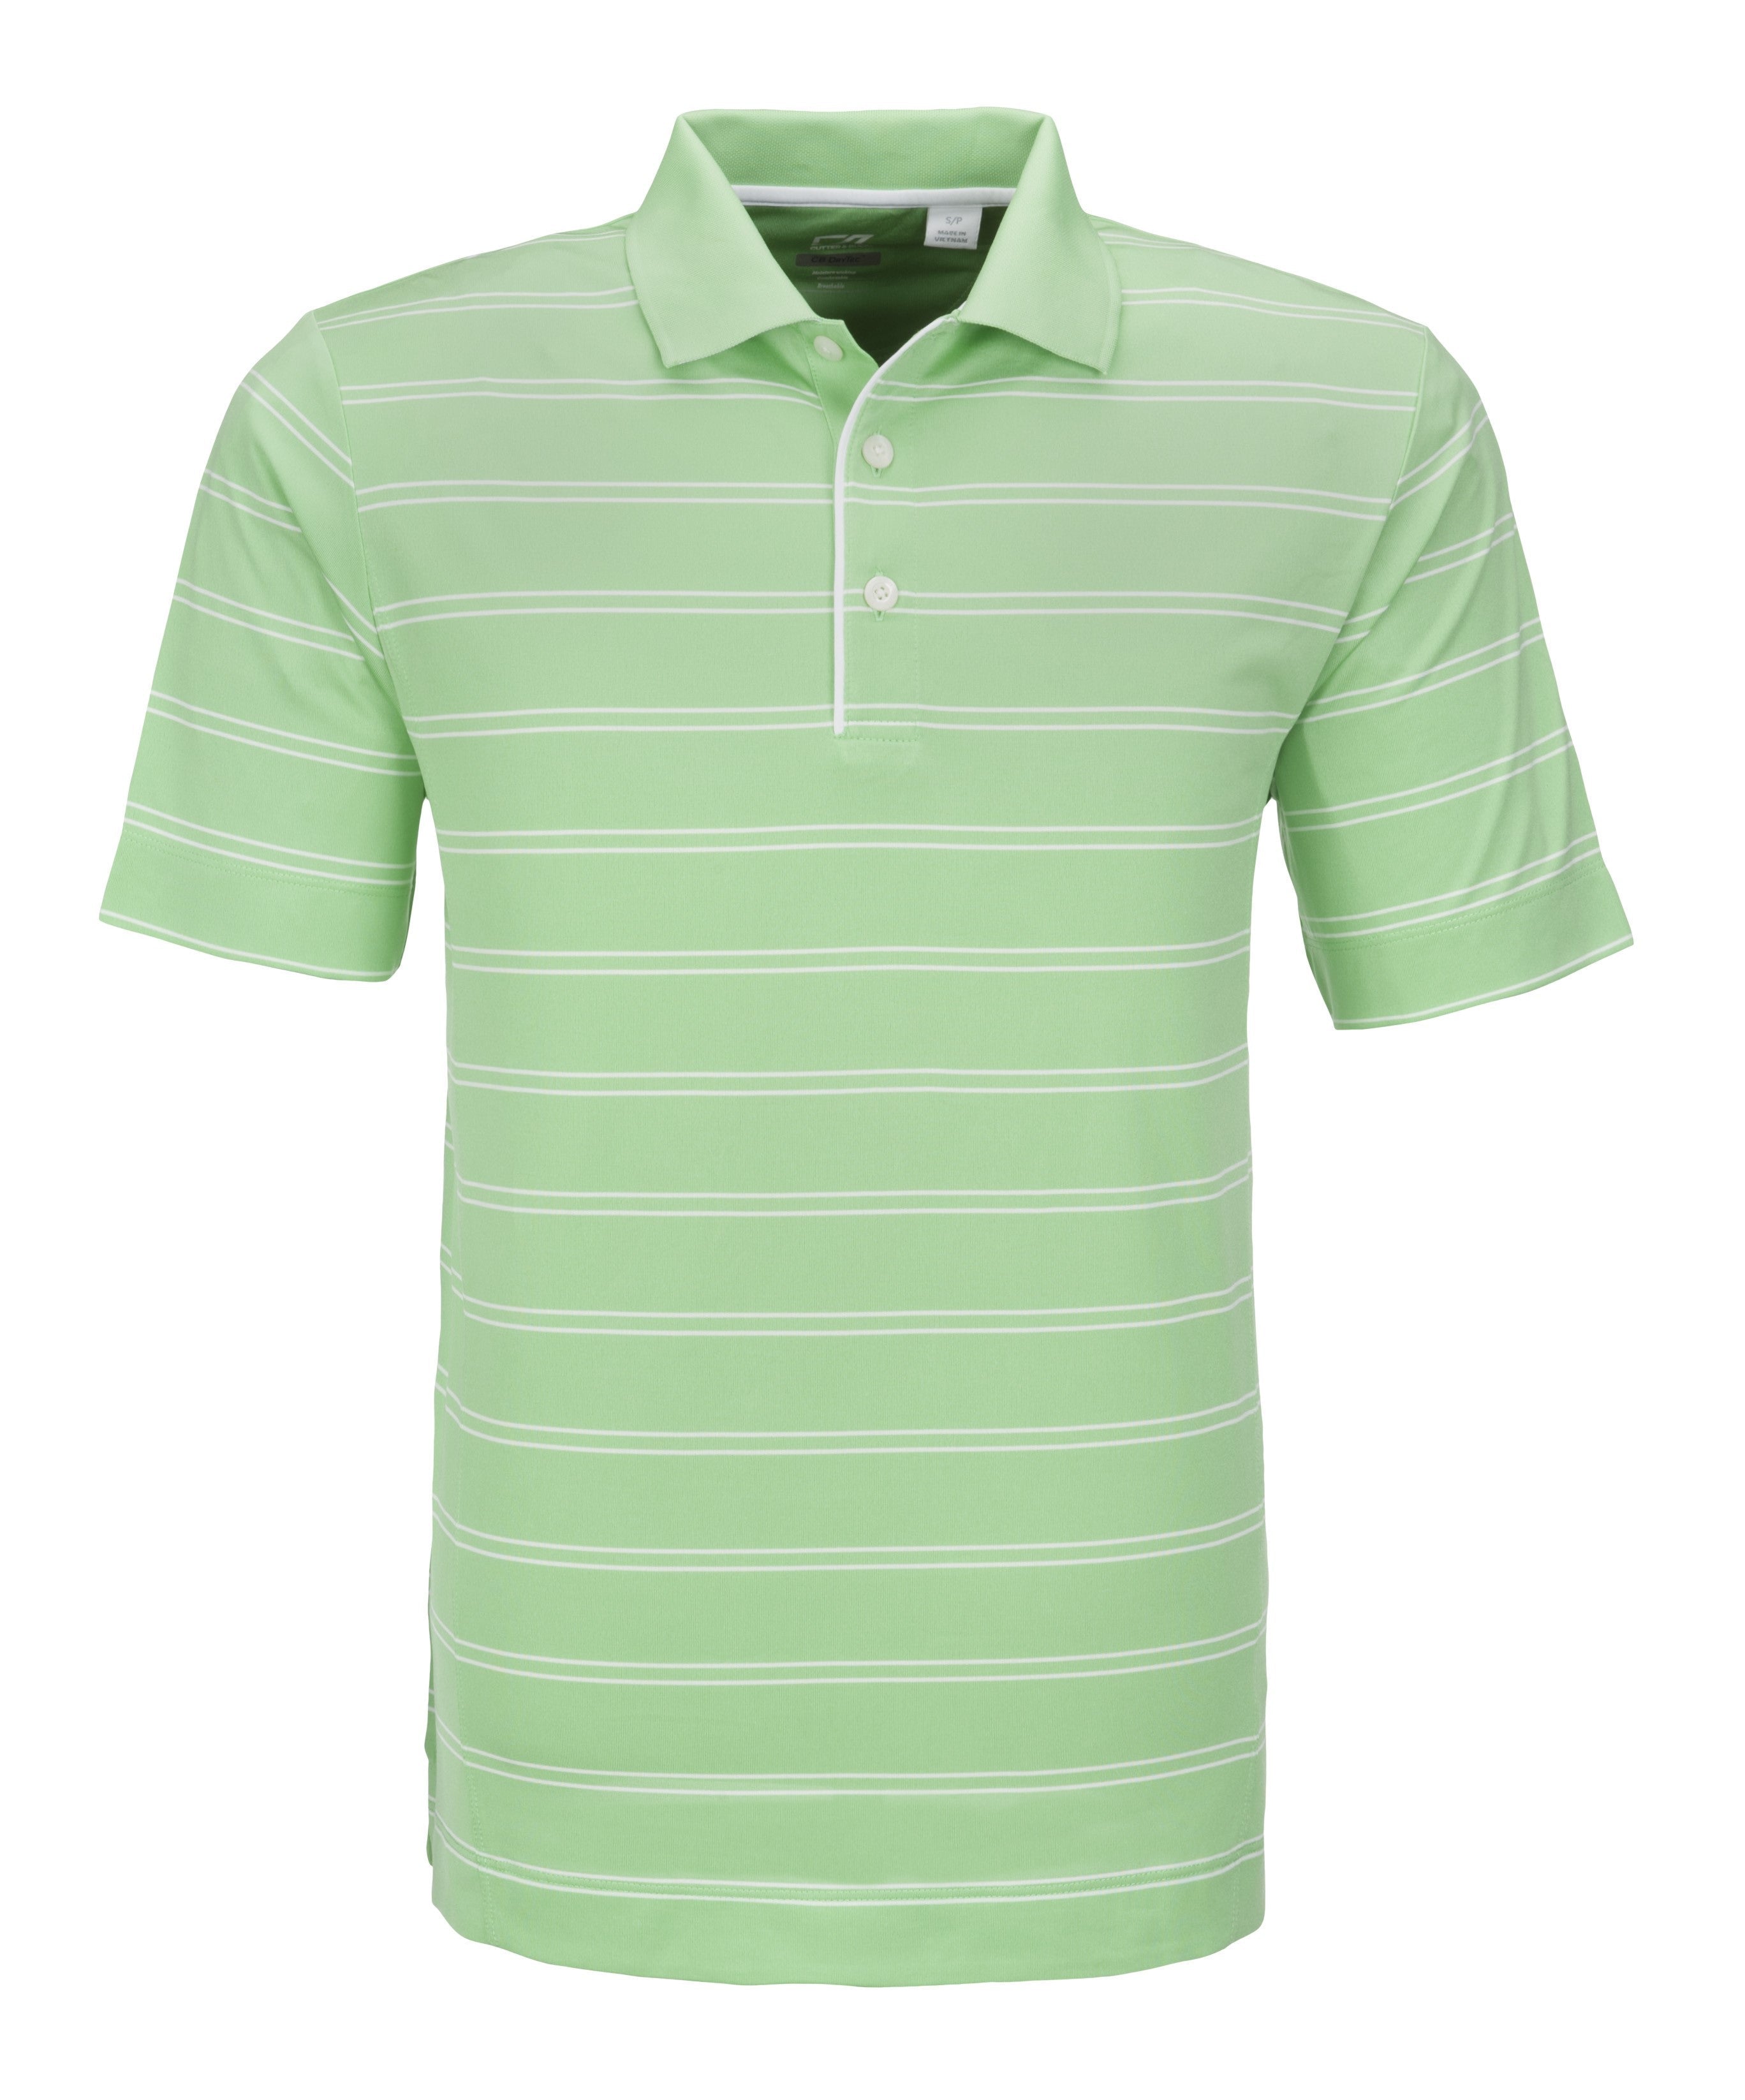 Mens Hawthorne Golf Shirt - Black Only-L-Lime-L